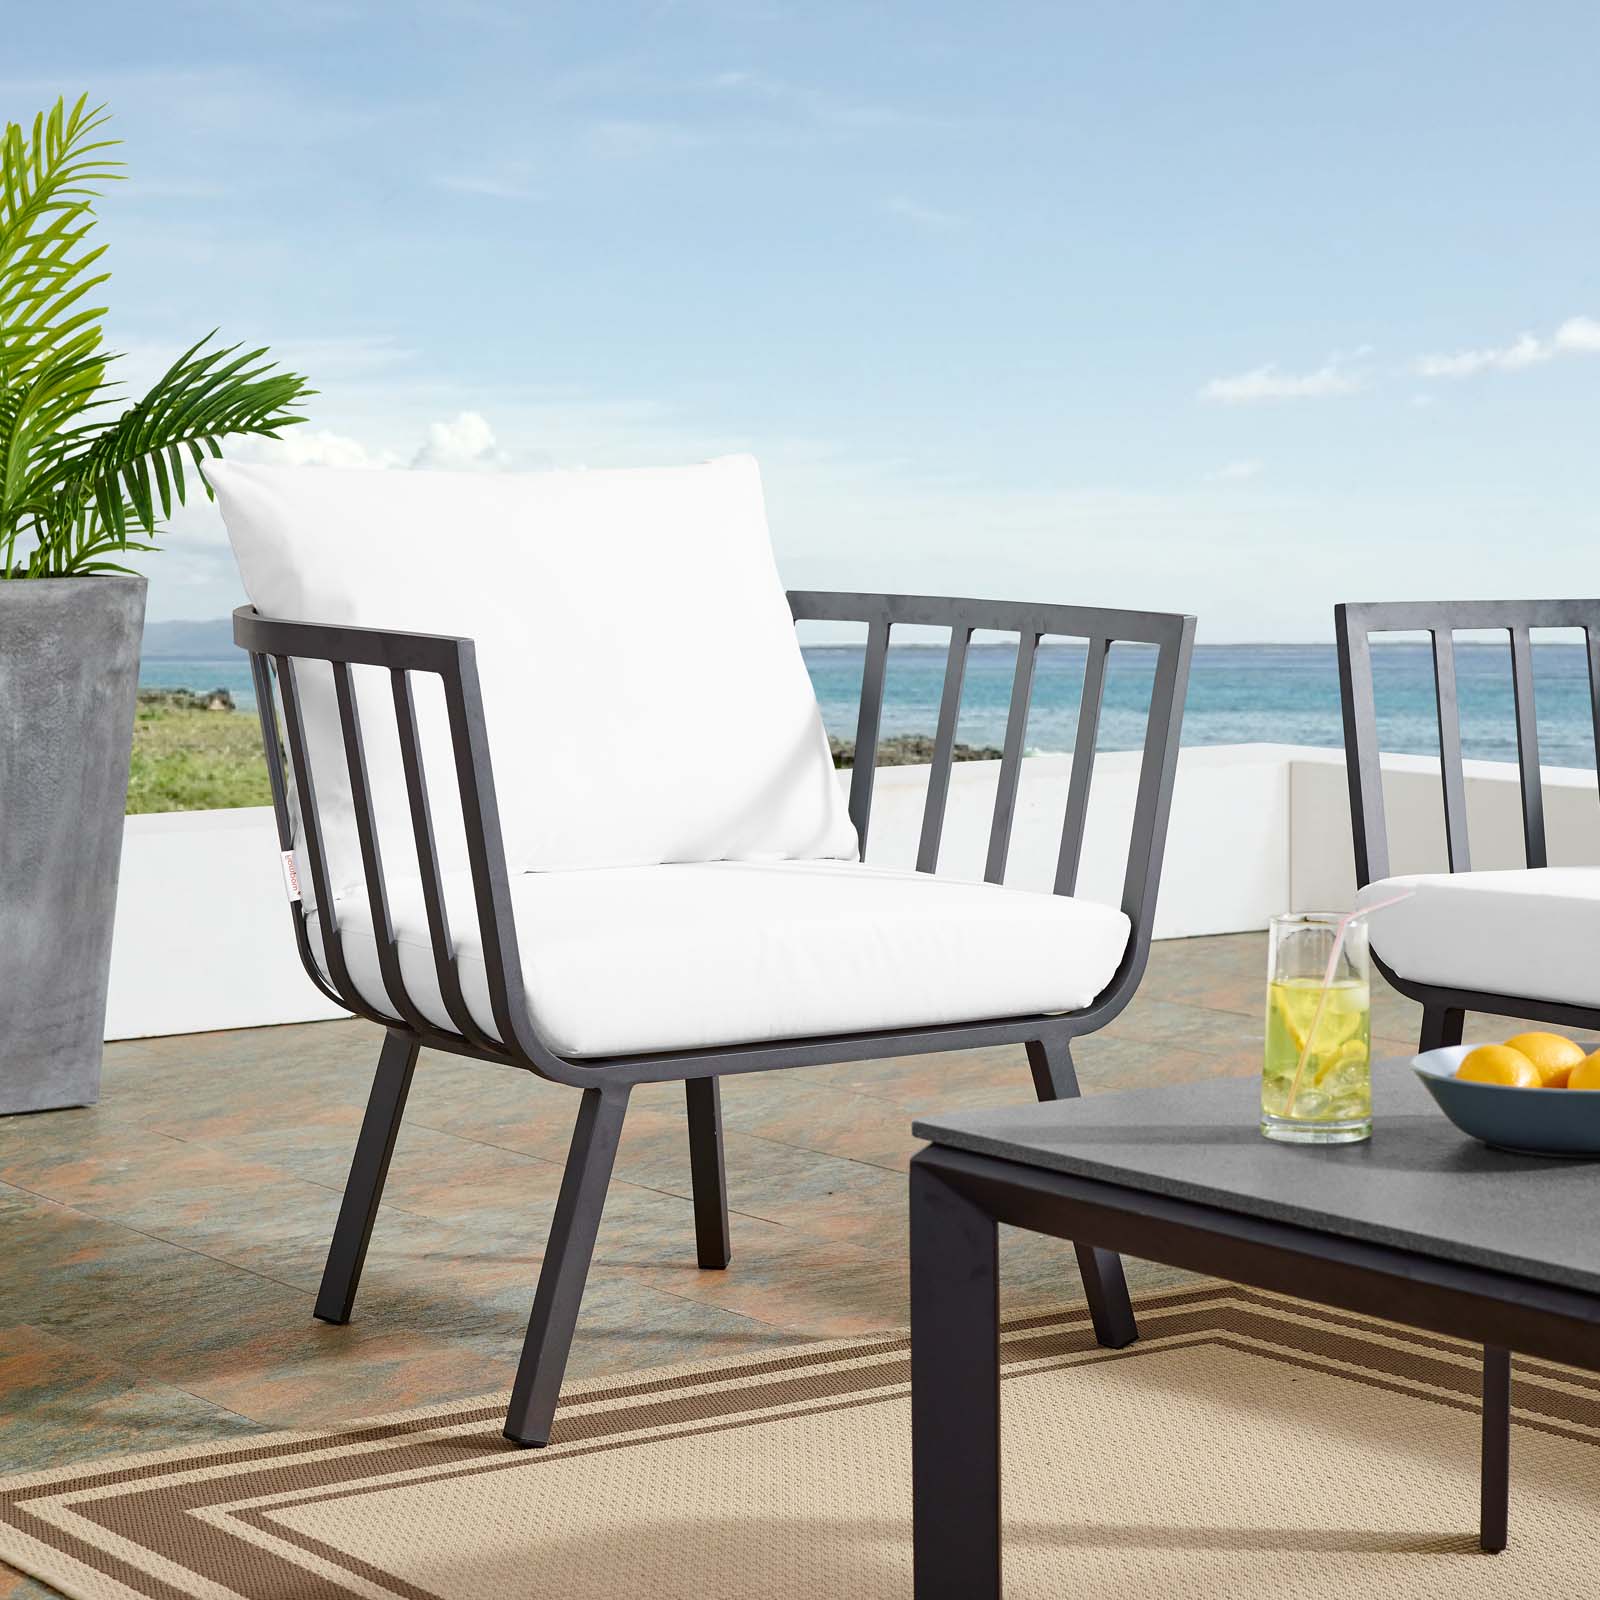 Contemporary Modern Urban Designer Outdoor Patio Balcony Garden Furniture Armchair Lounge Chair, Aluminum Fabric, Grey Gray White - image 4 of 6